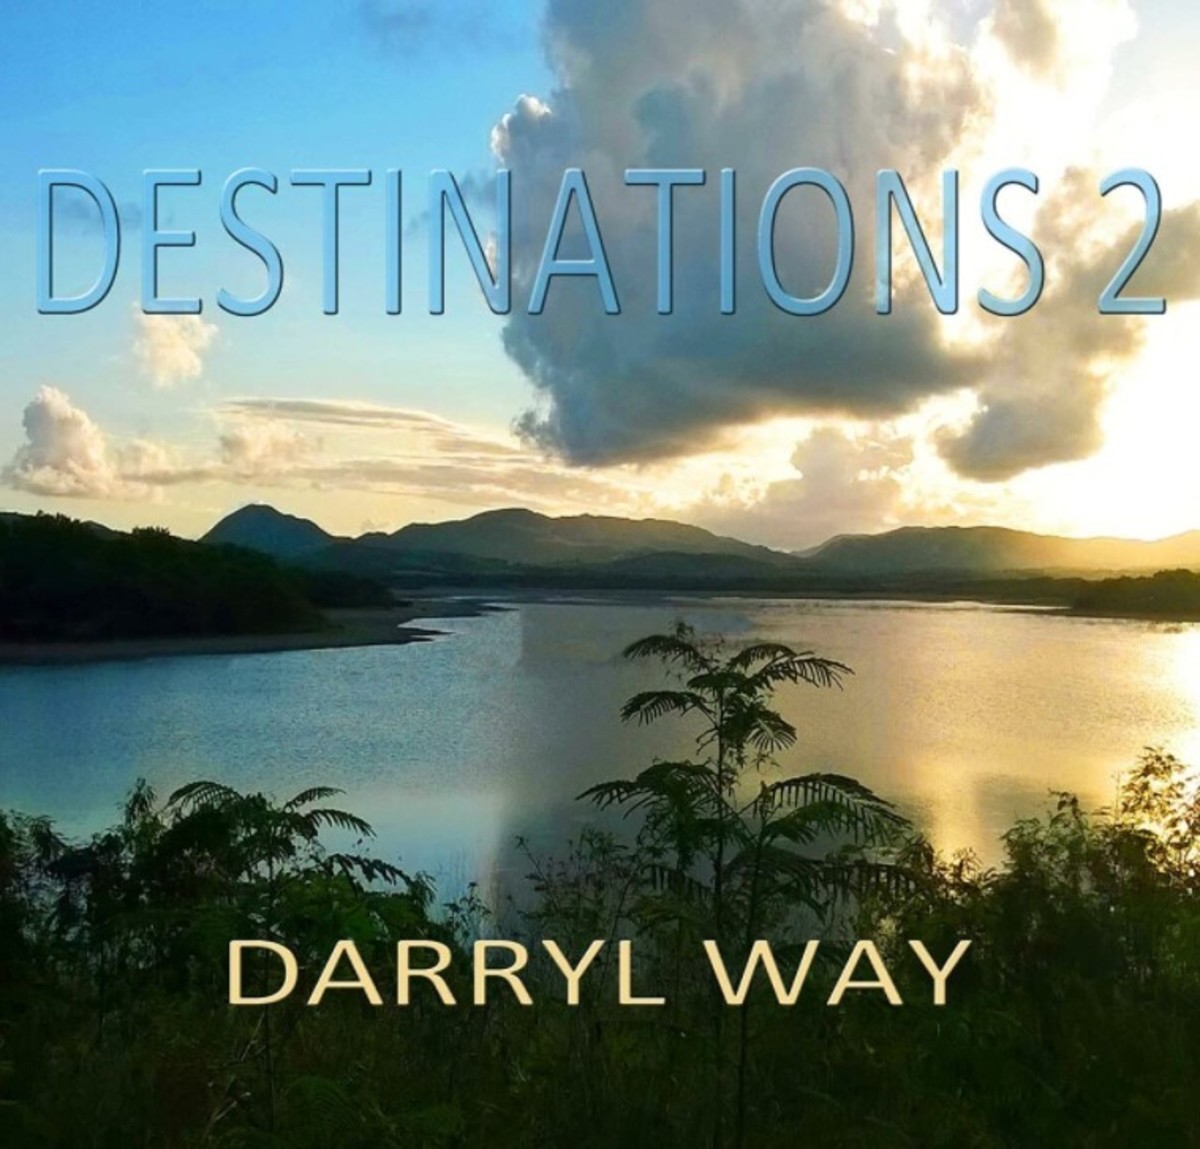 Darryl Way2 Destinations 2